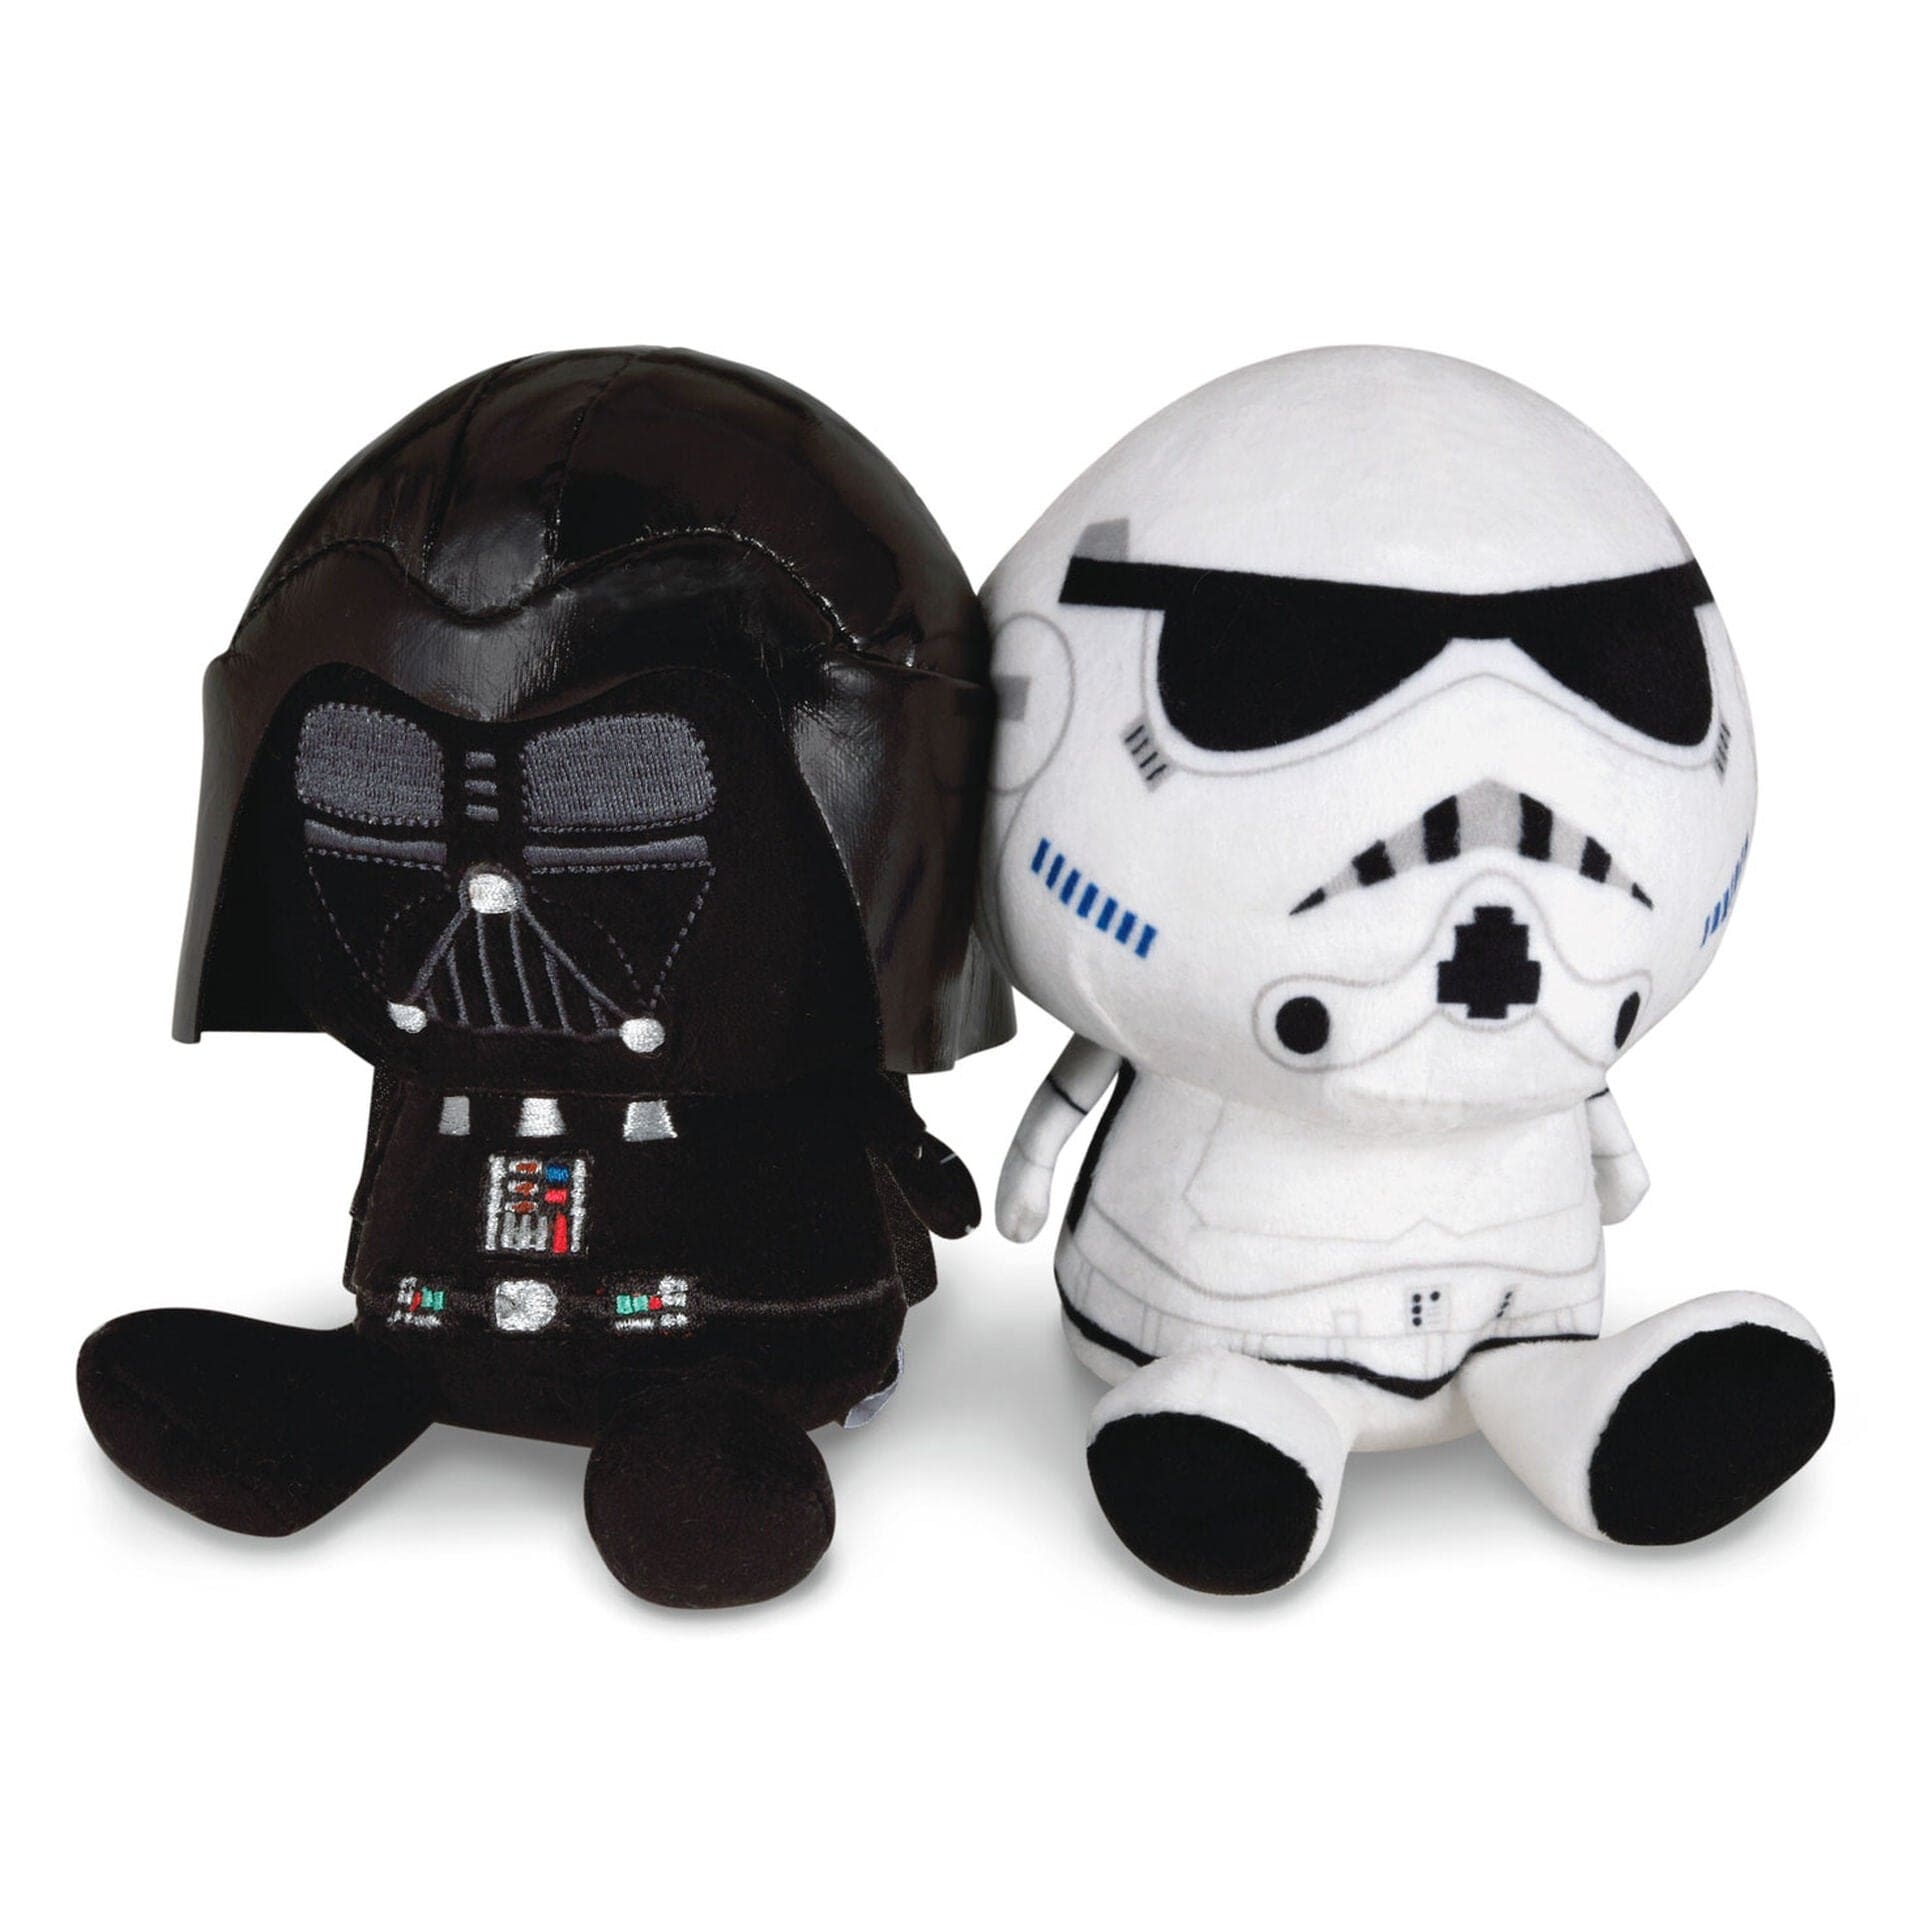 Star Wars Darth Vader and Stormtrooper 5